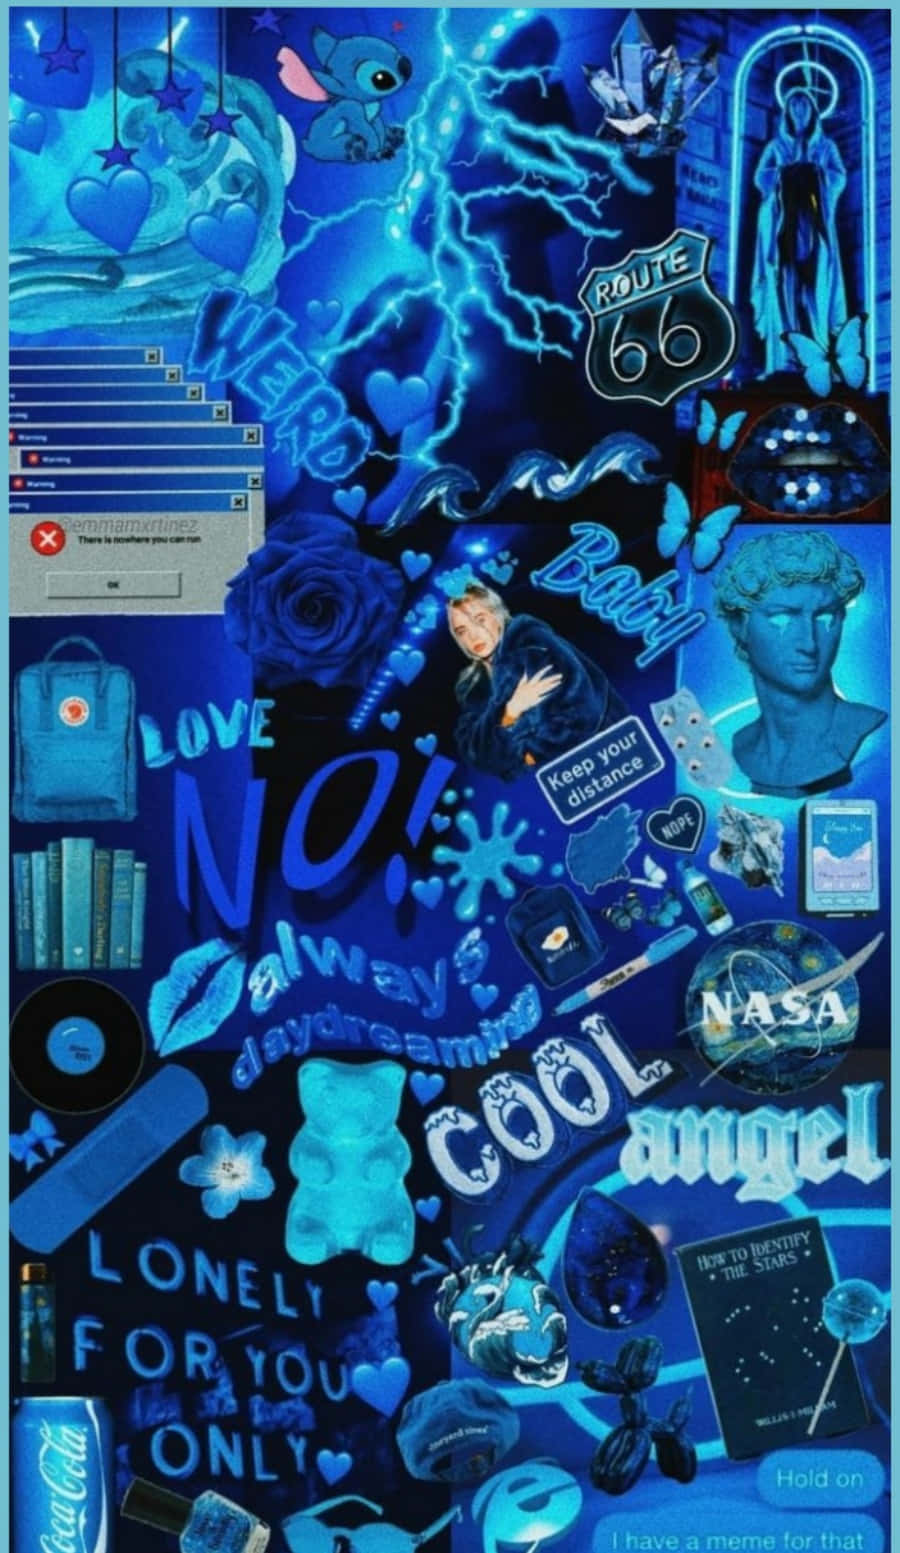 Popular Culture Aesthetic Blue Collage Design Wallpaper